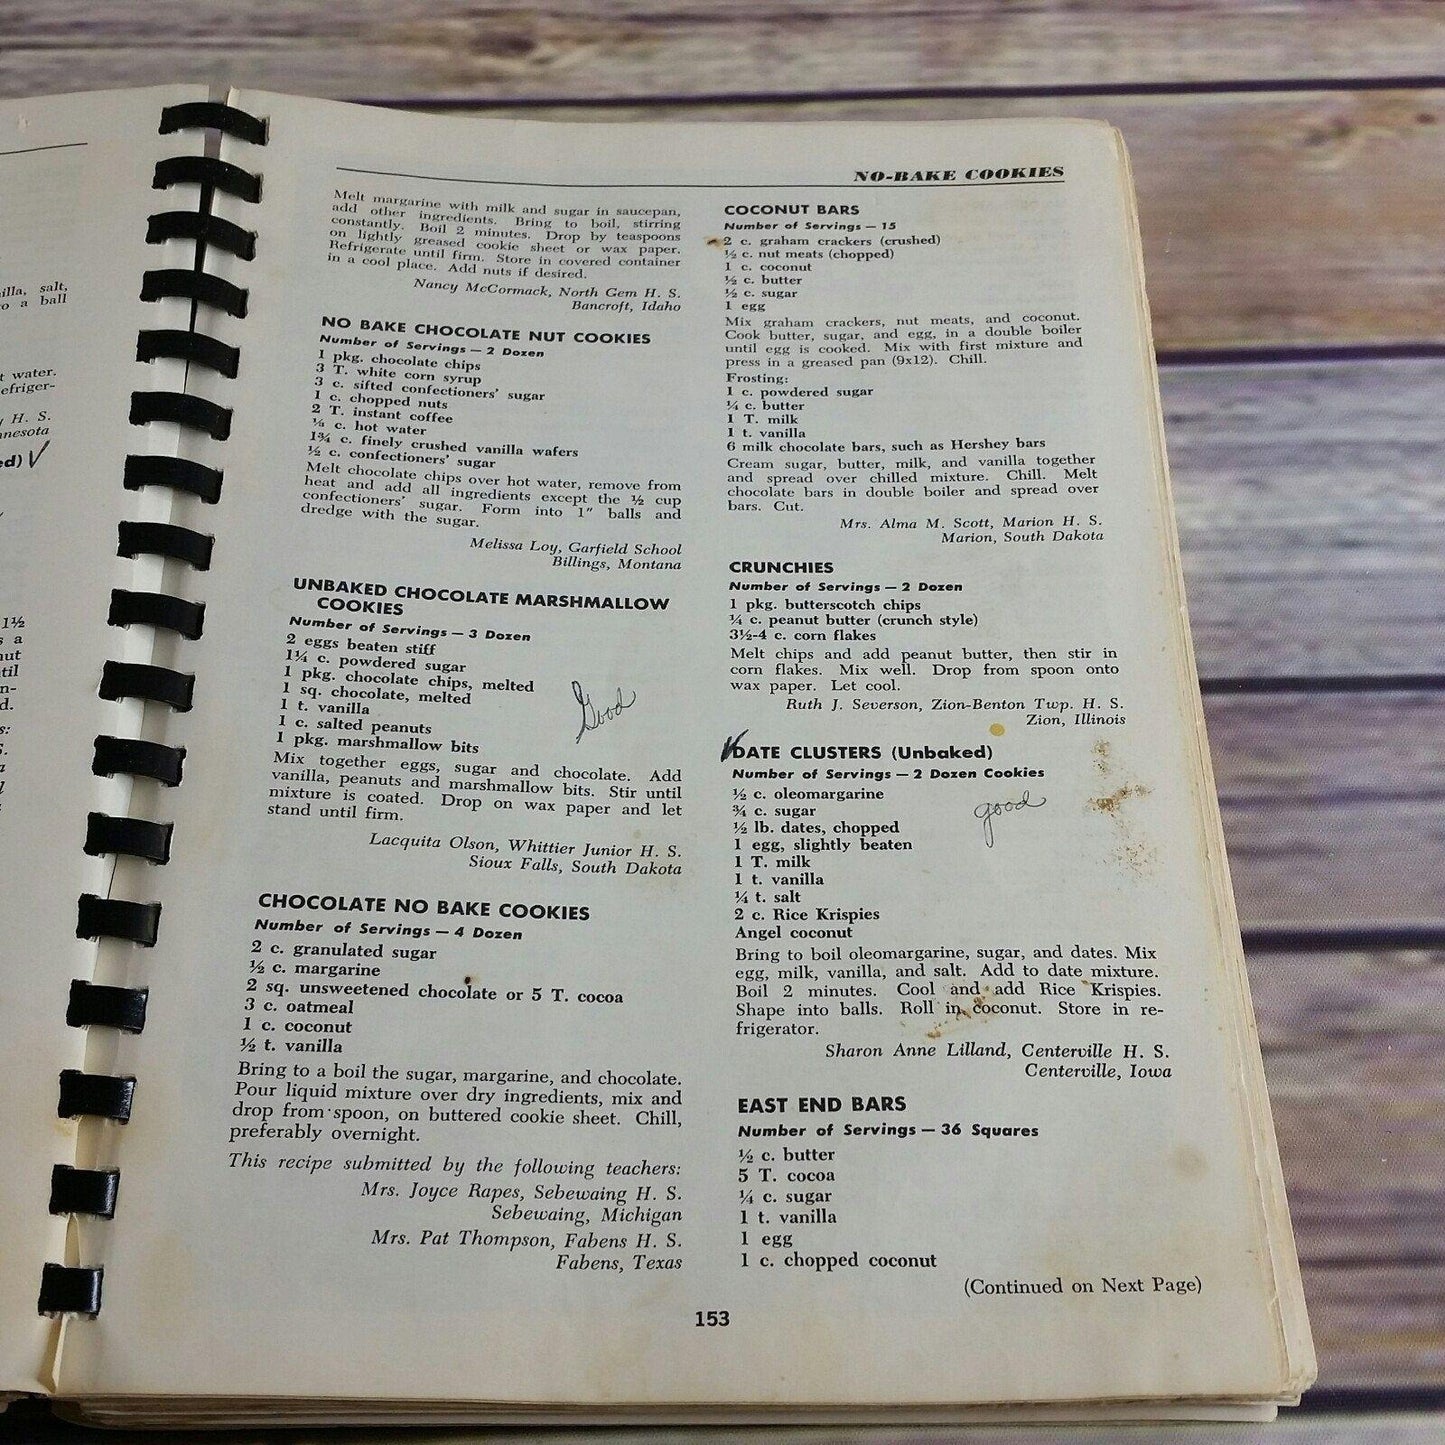 Vintage Desserts Cookbook Fav Recipes of American Home Economics Teachers 1963 Spiral Bound Paperback